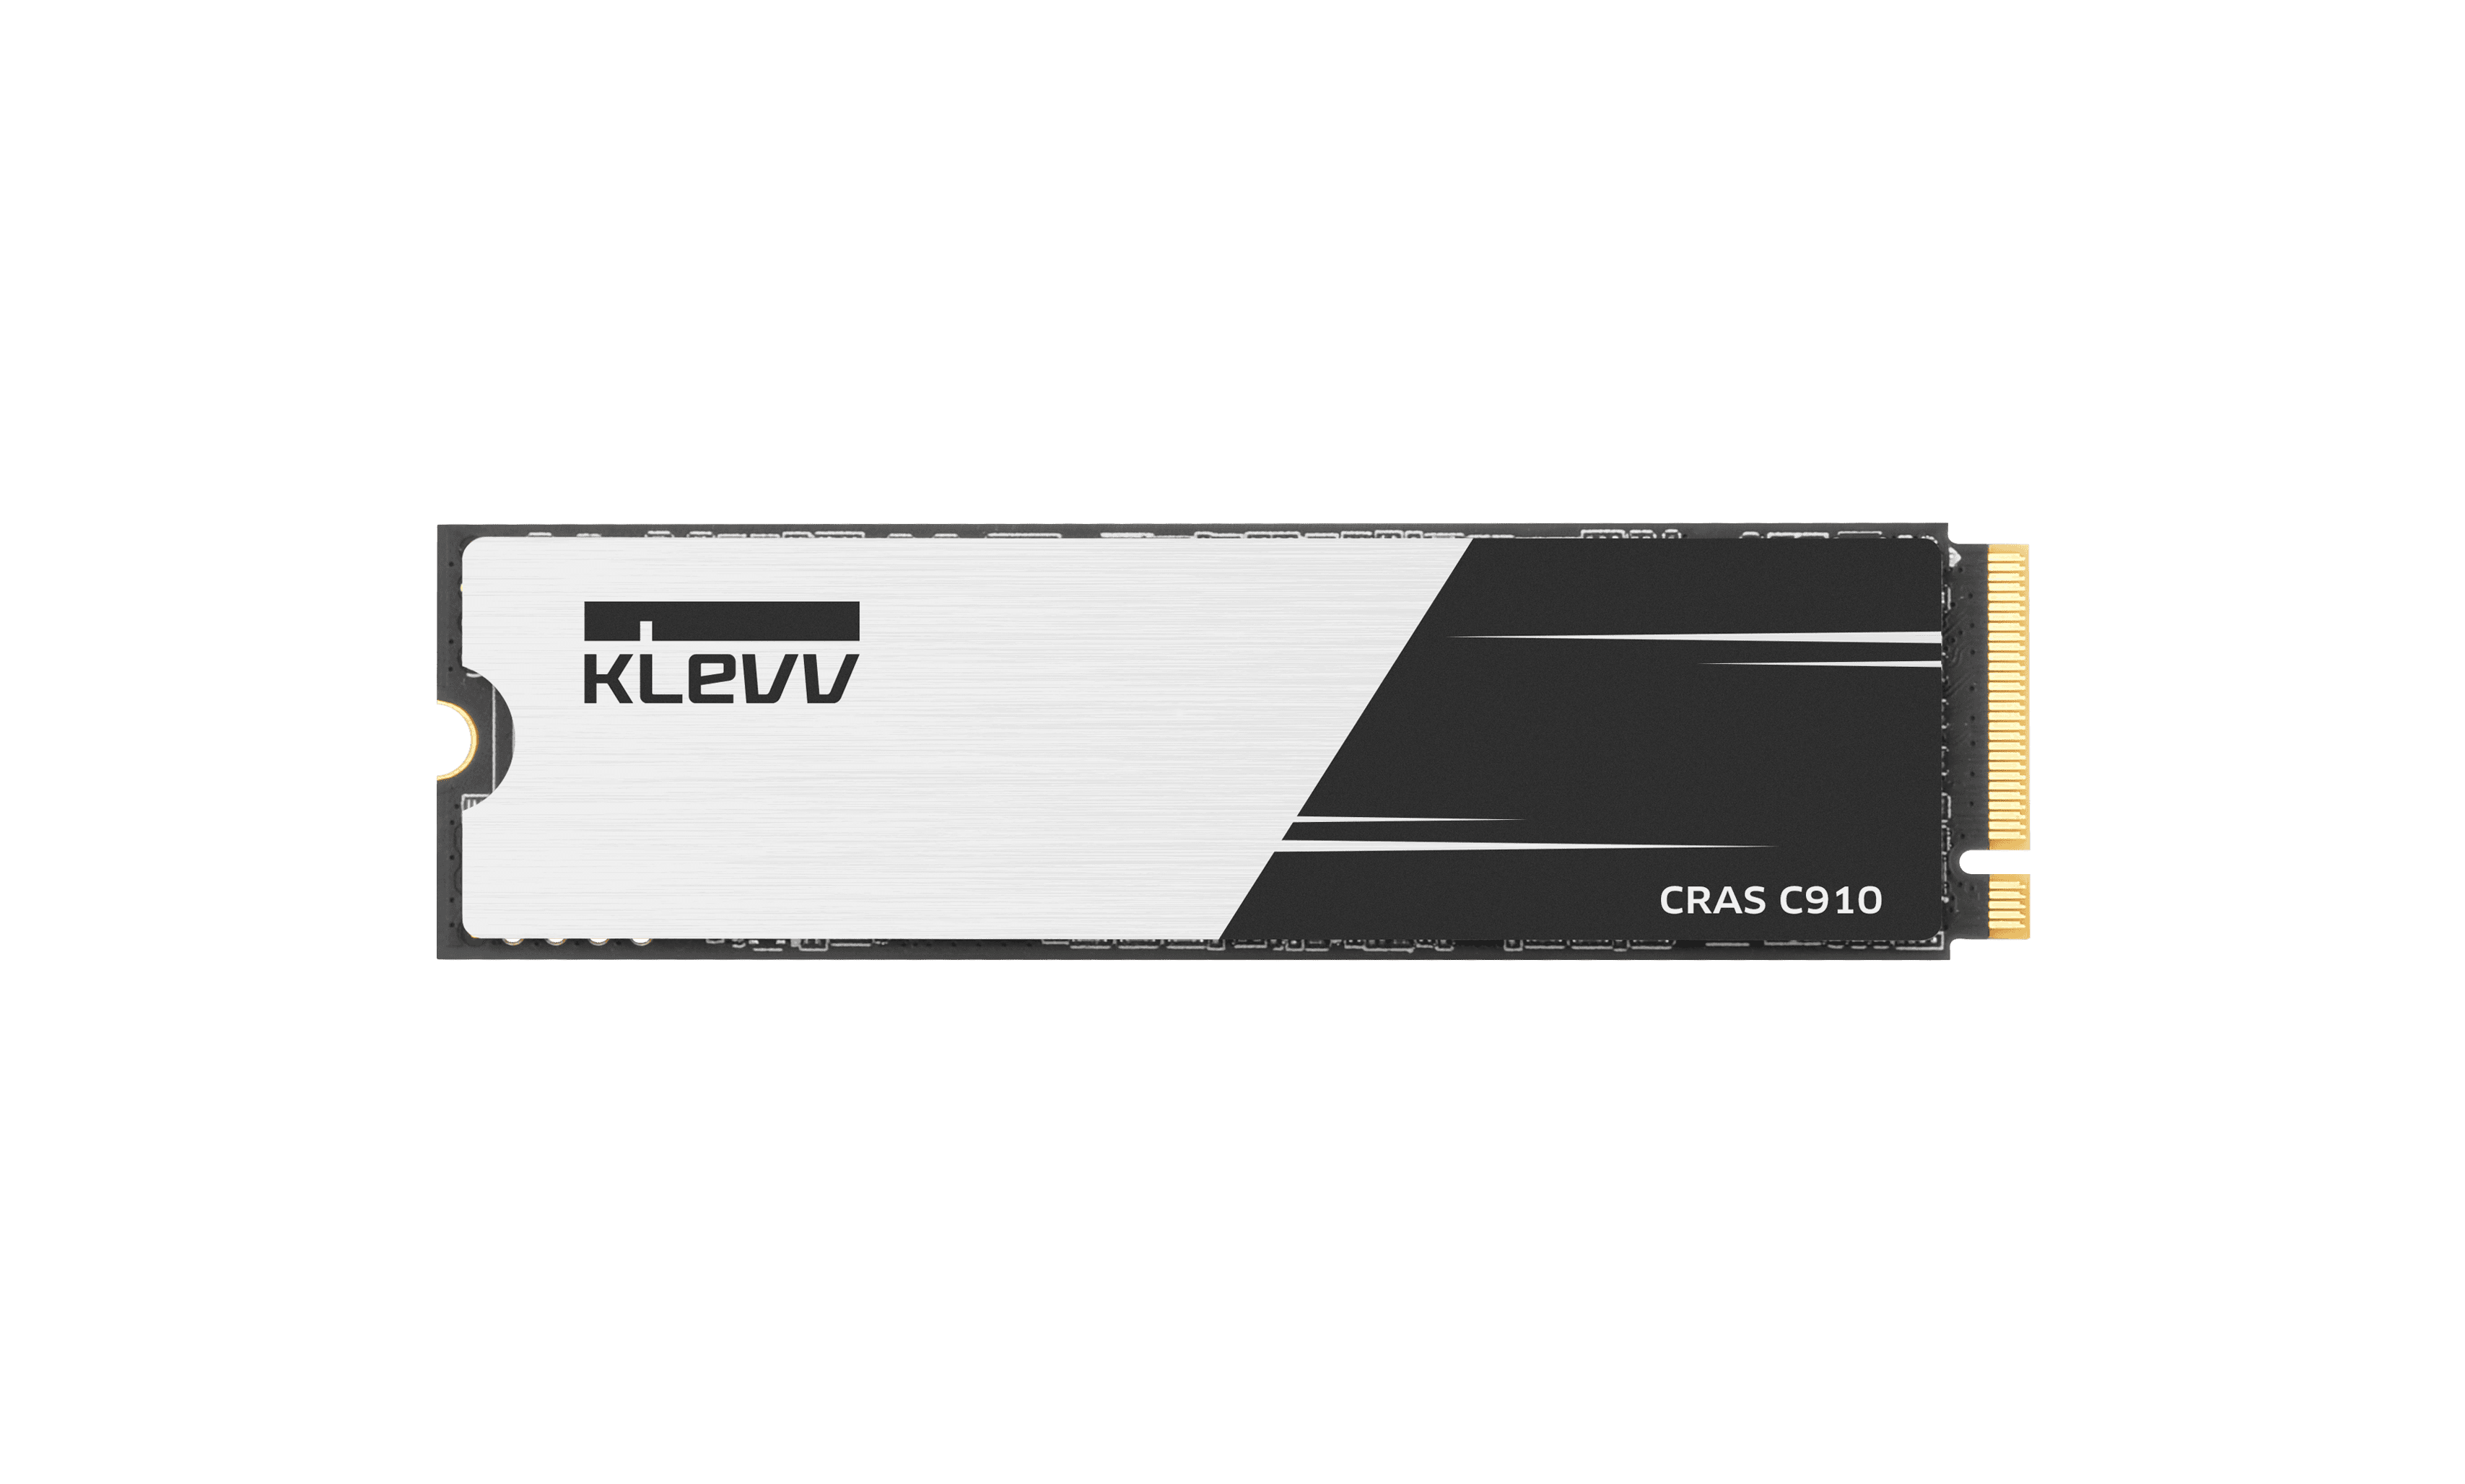 CRAS 500G C910 M.2 NVME PCIE 2280 SSD